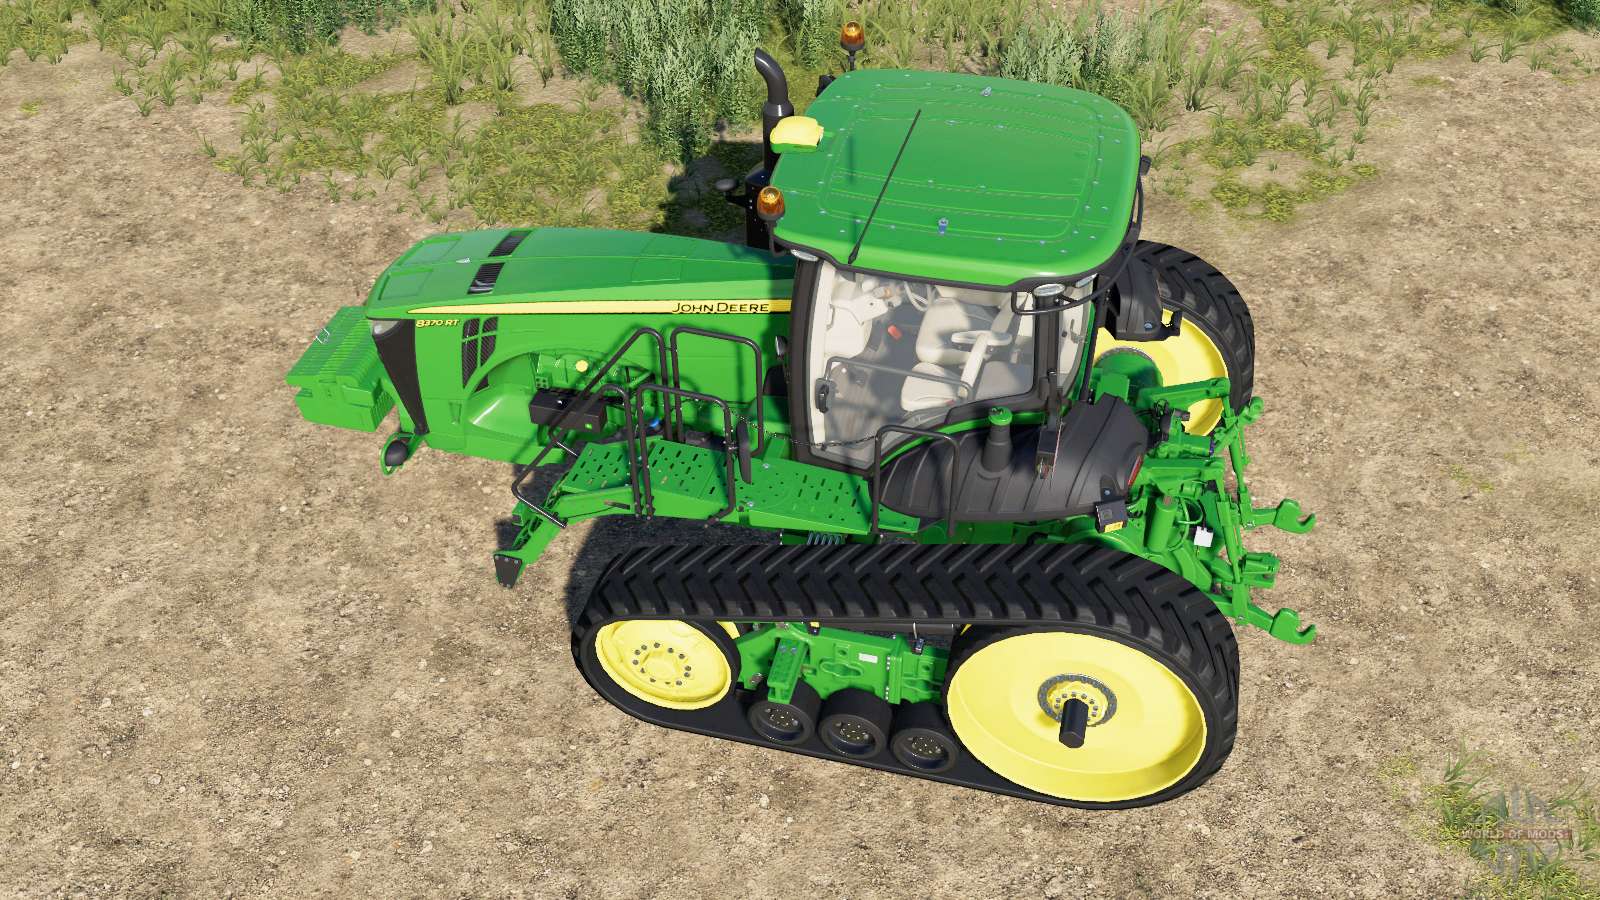 John Deere 8rt Series With Seatcam для Farming Simulator 2017 7982